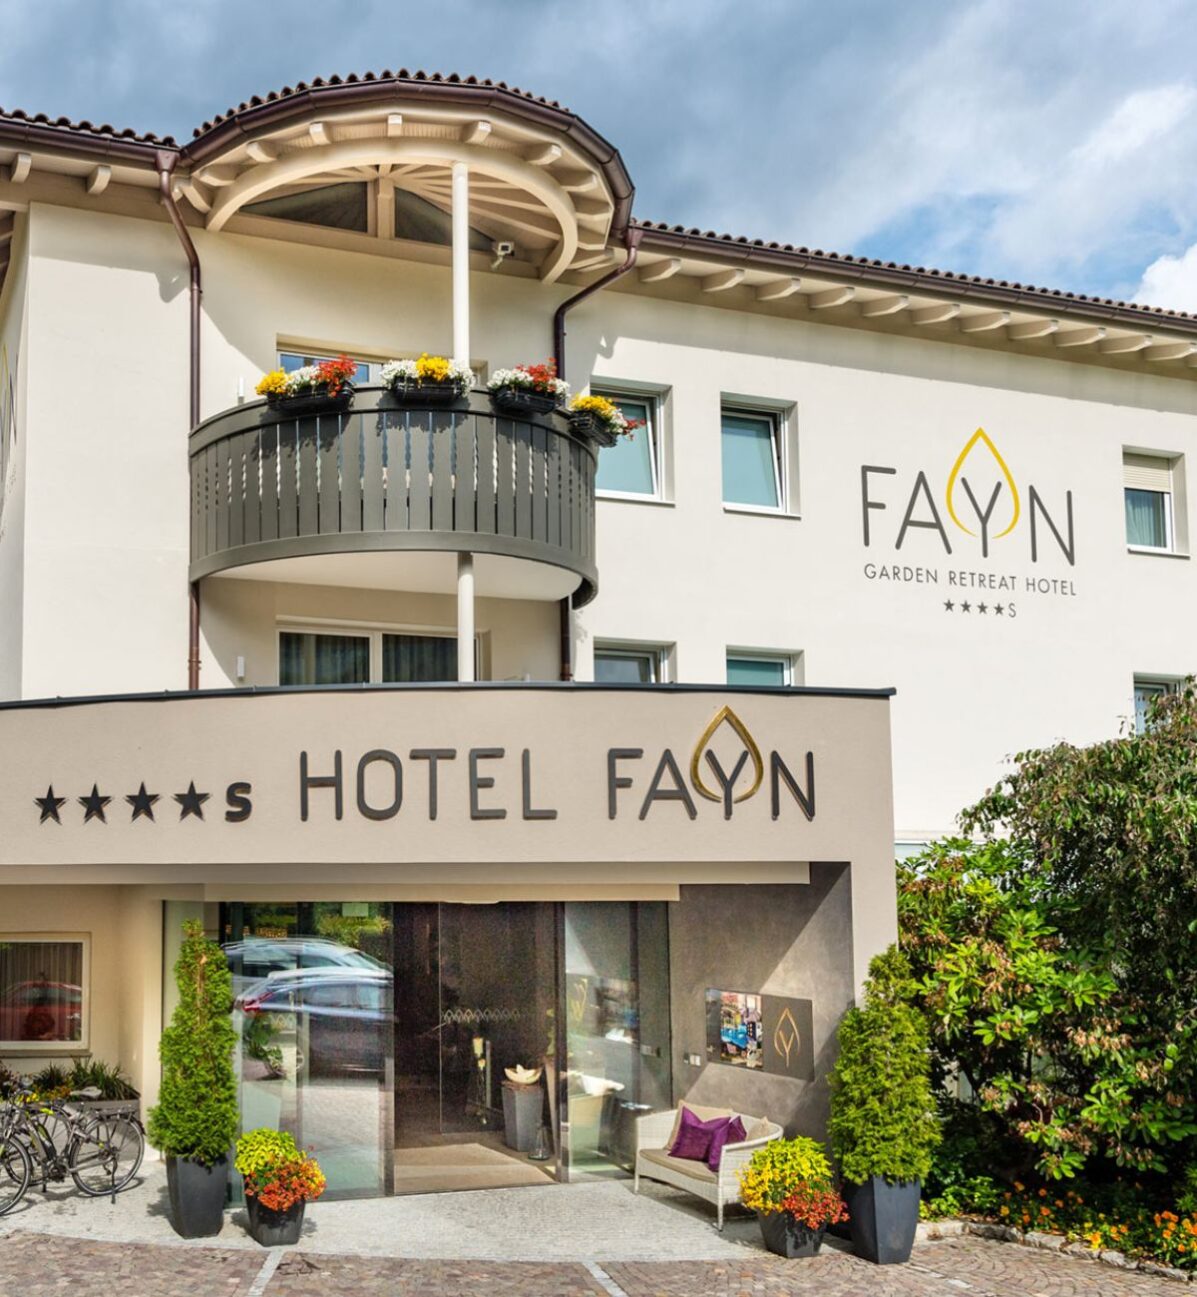 Hotel Fayn Garden Retreat **** – Lagundo